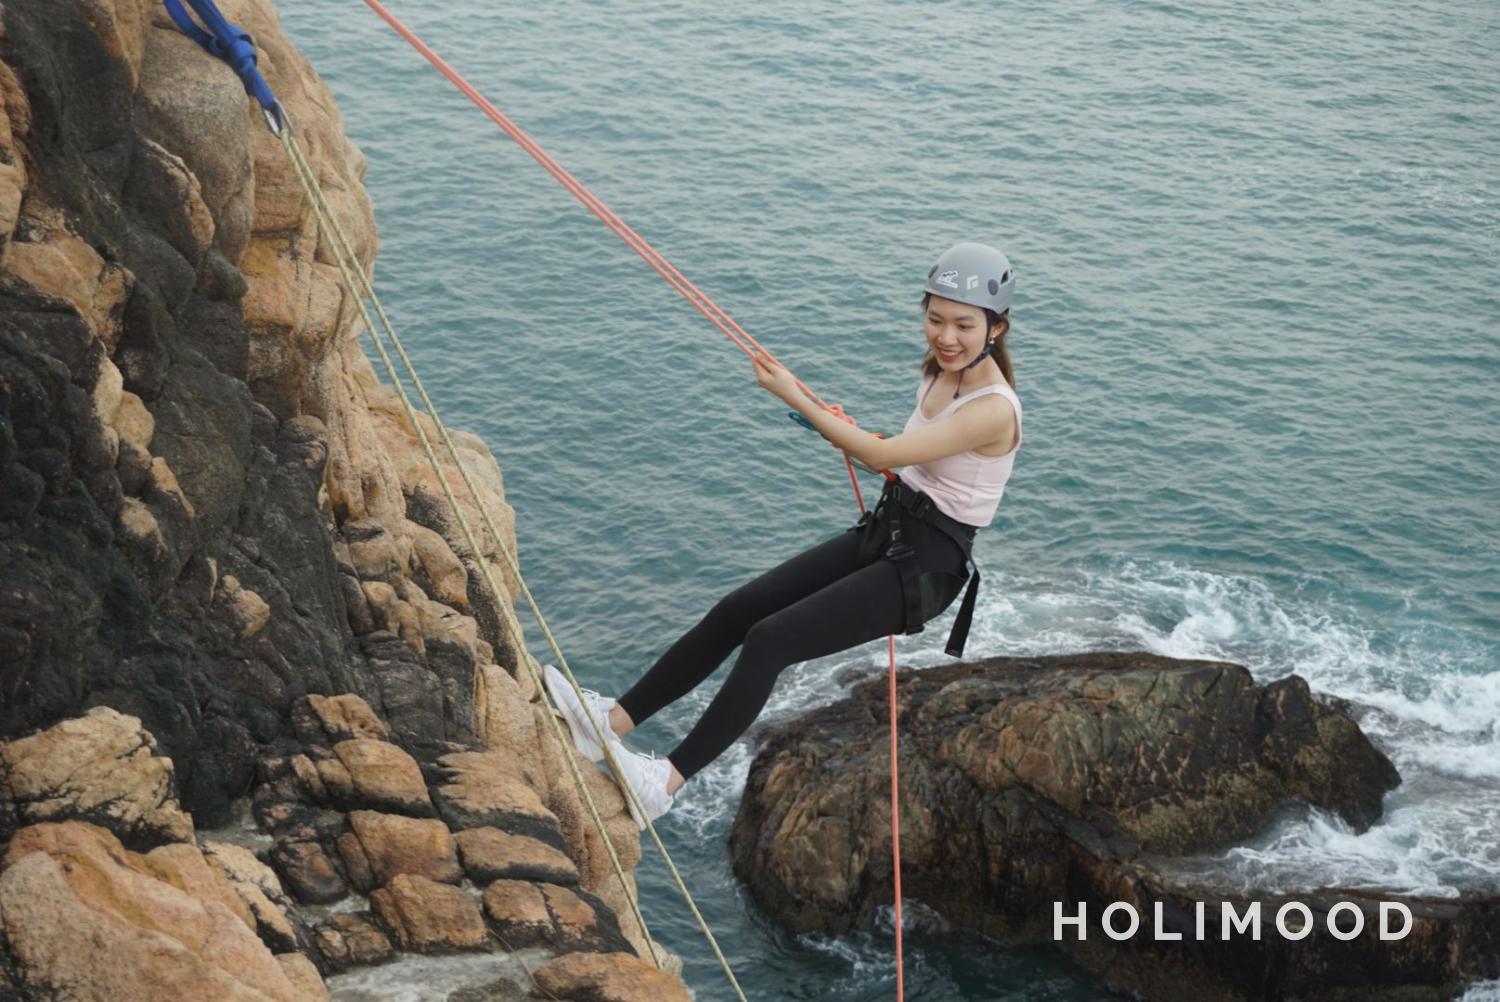 Explorer Hong Kong 【Shek O】Zipline, Rock Climbing and Abseiling Experience - Charter (min. 8 pax) 10